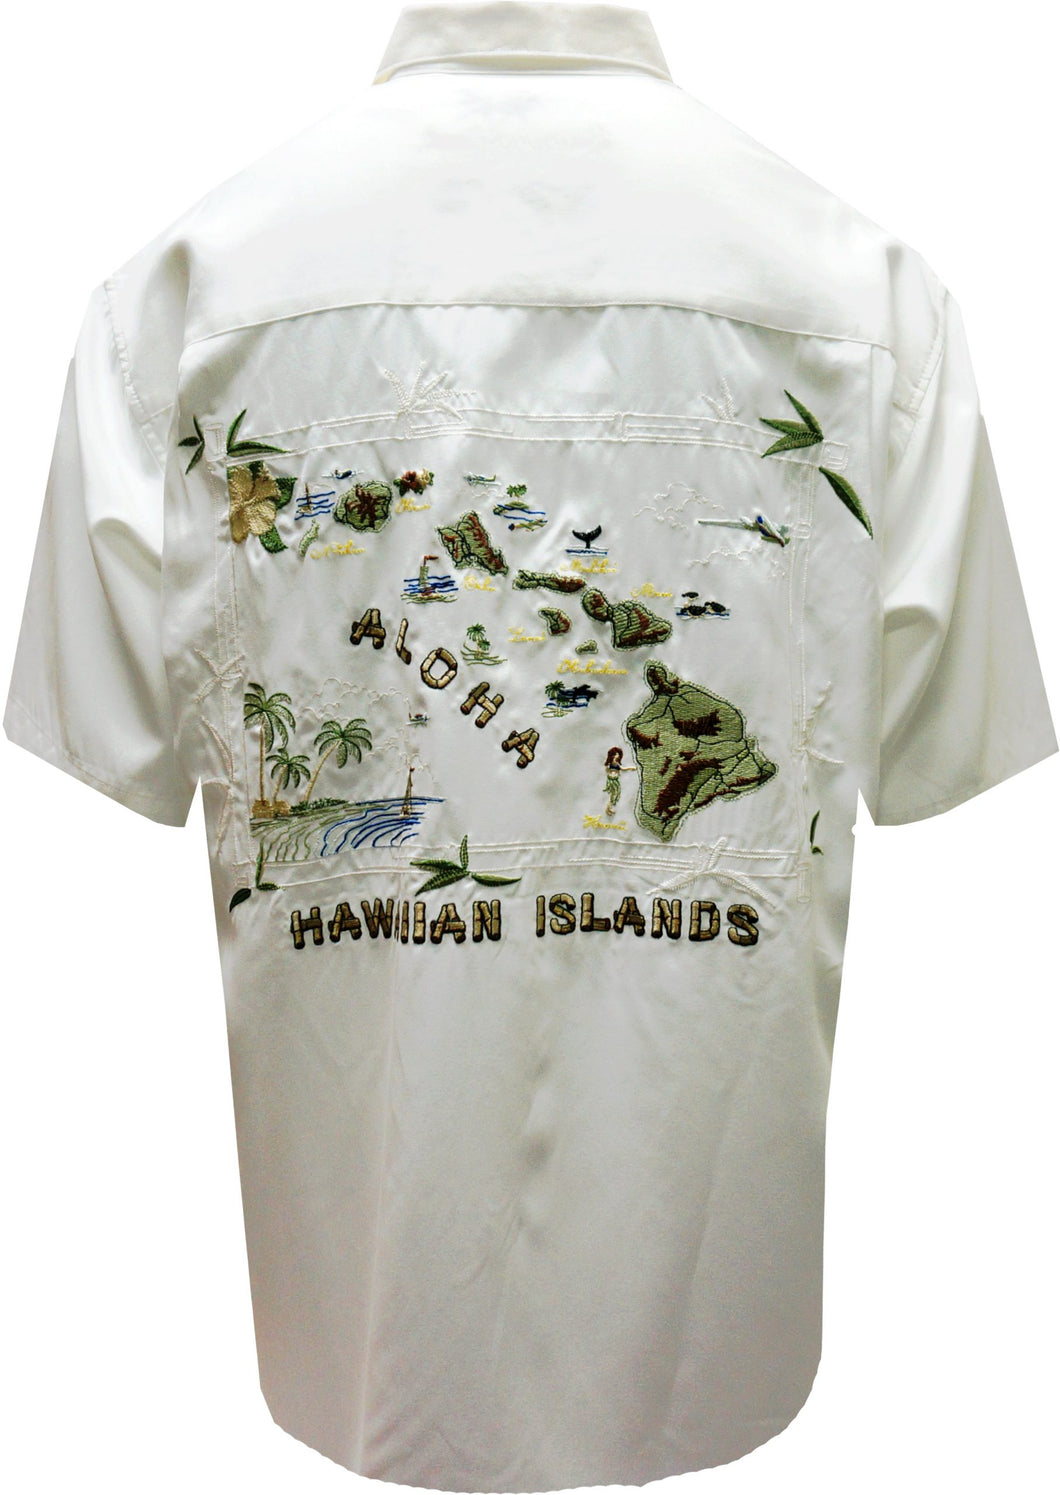 Embroidered Aloha Shirts  Hawaii Islands